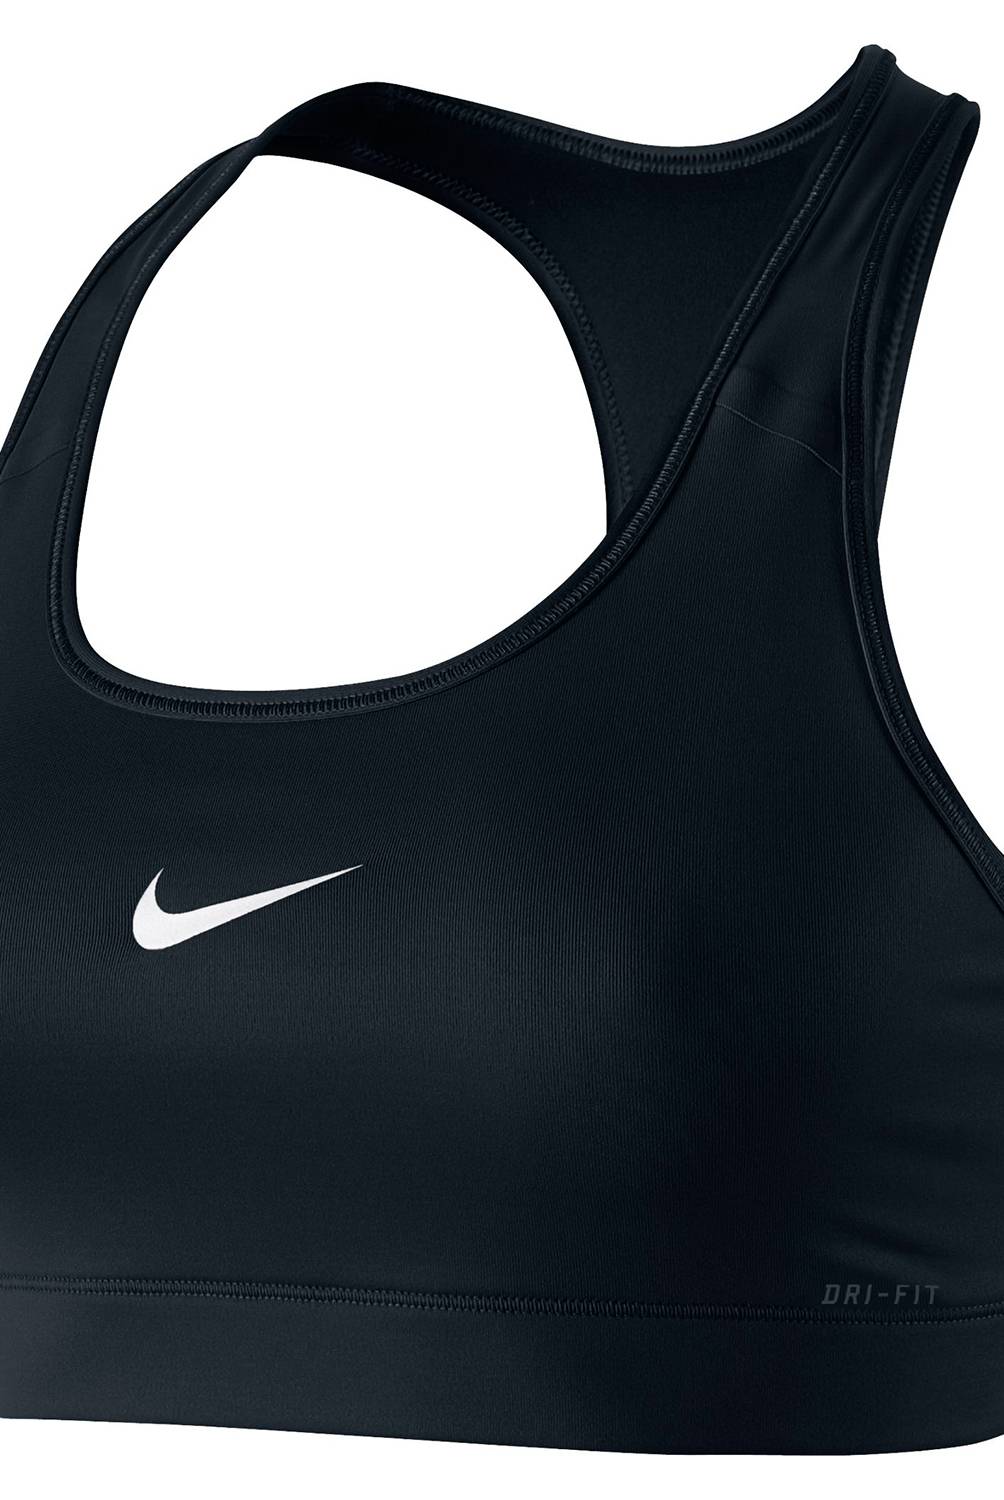 Nike - Peto Mujer Victory Compression